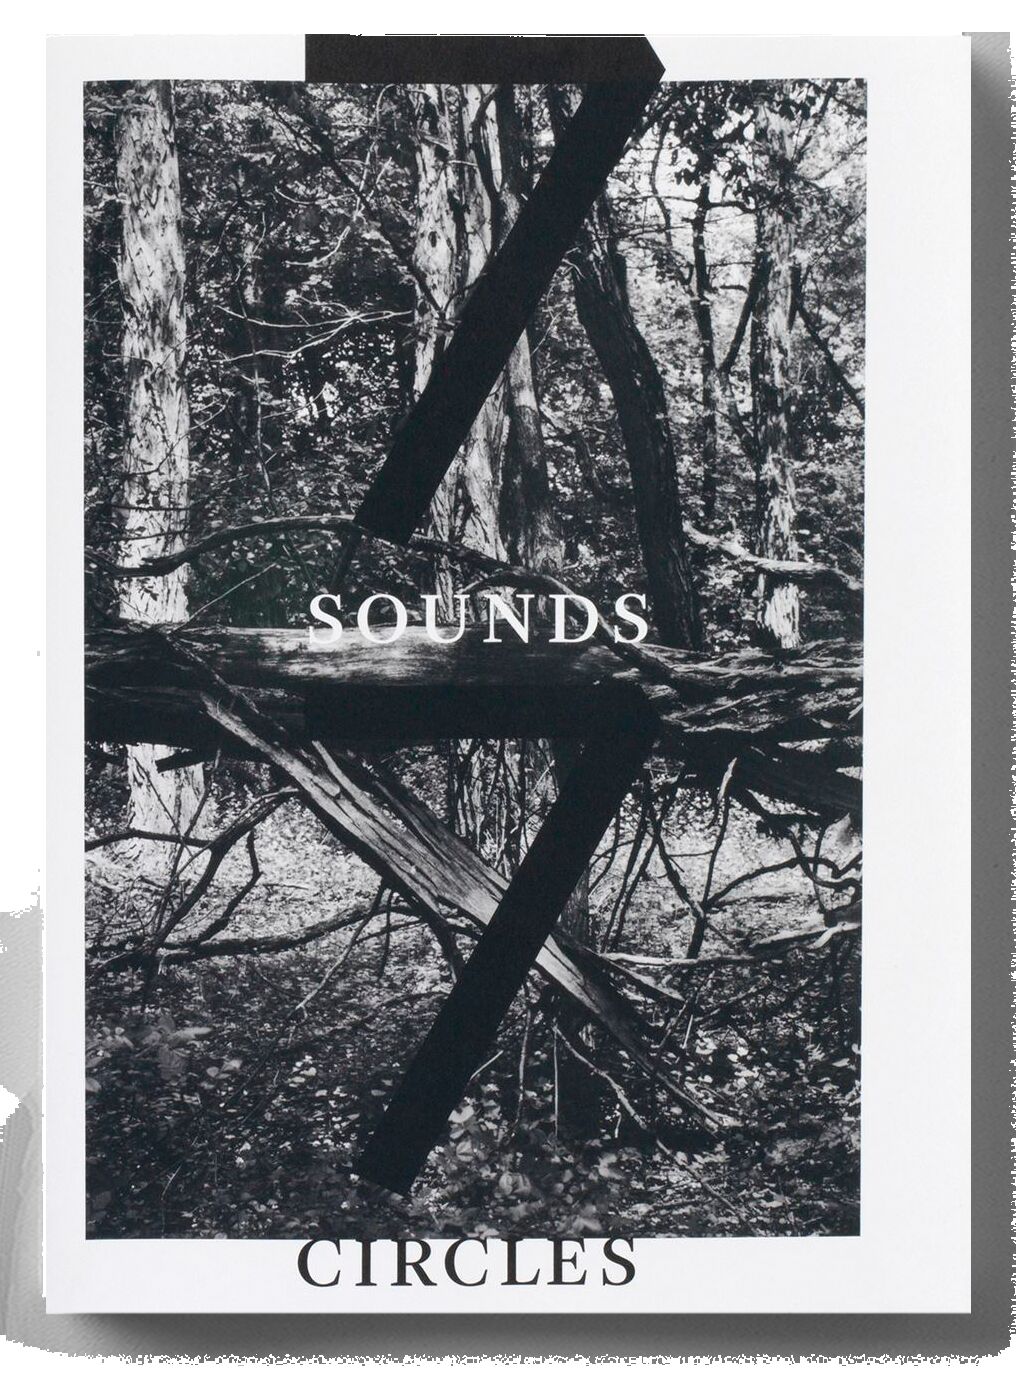 Lothar Baumgarten: Seven Sounds, Seven Circles